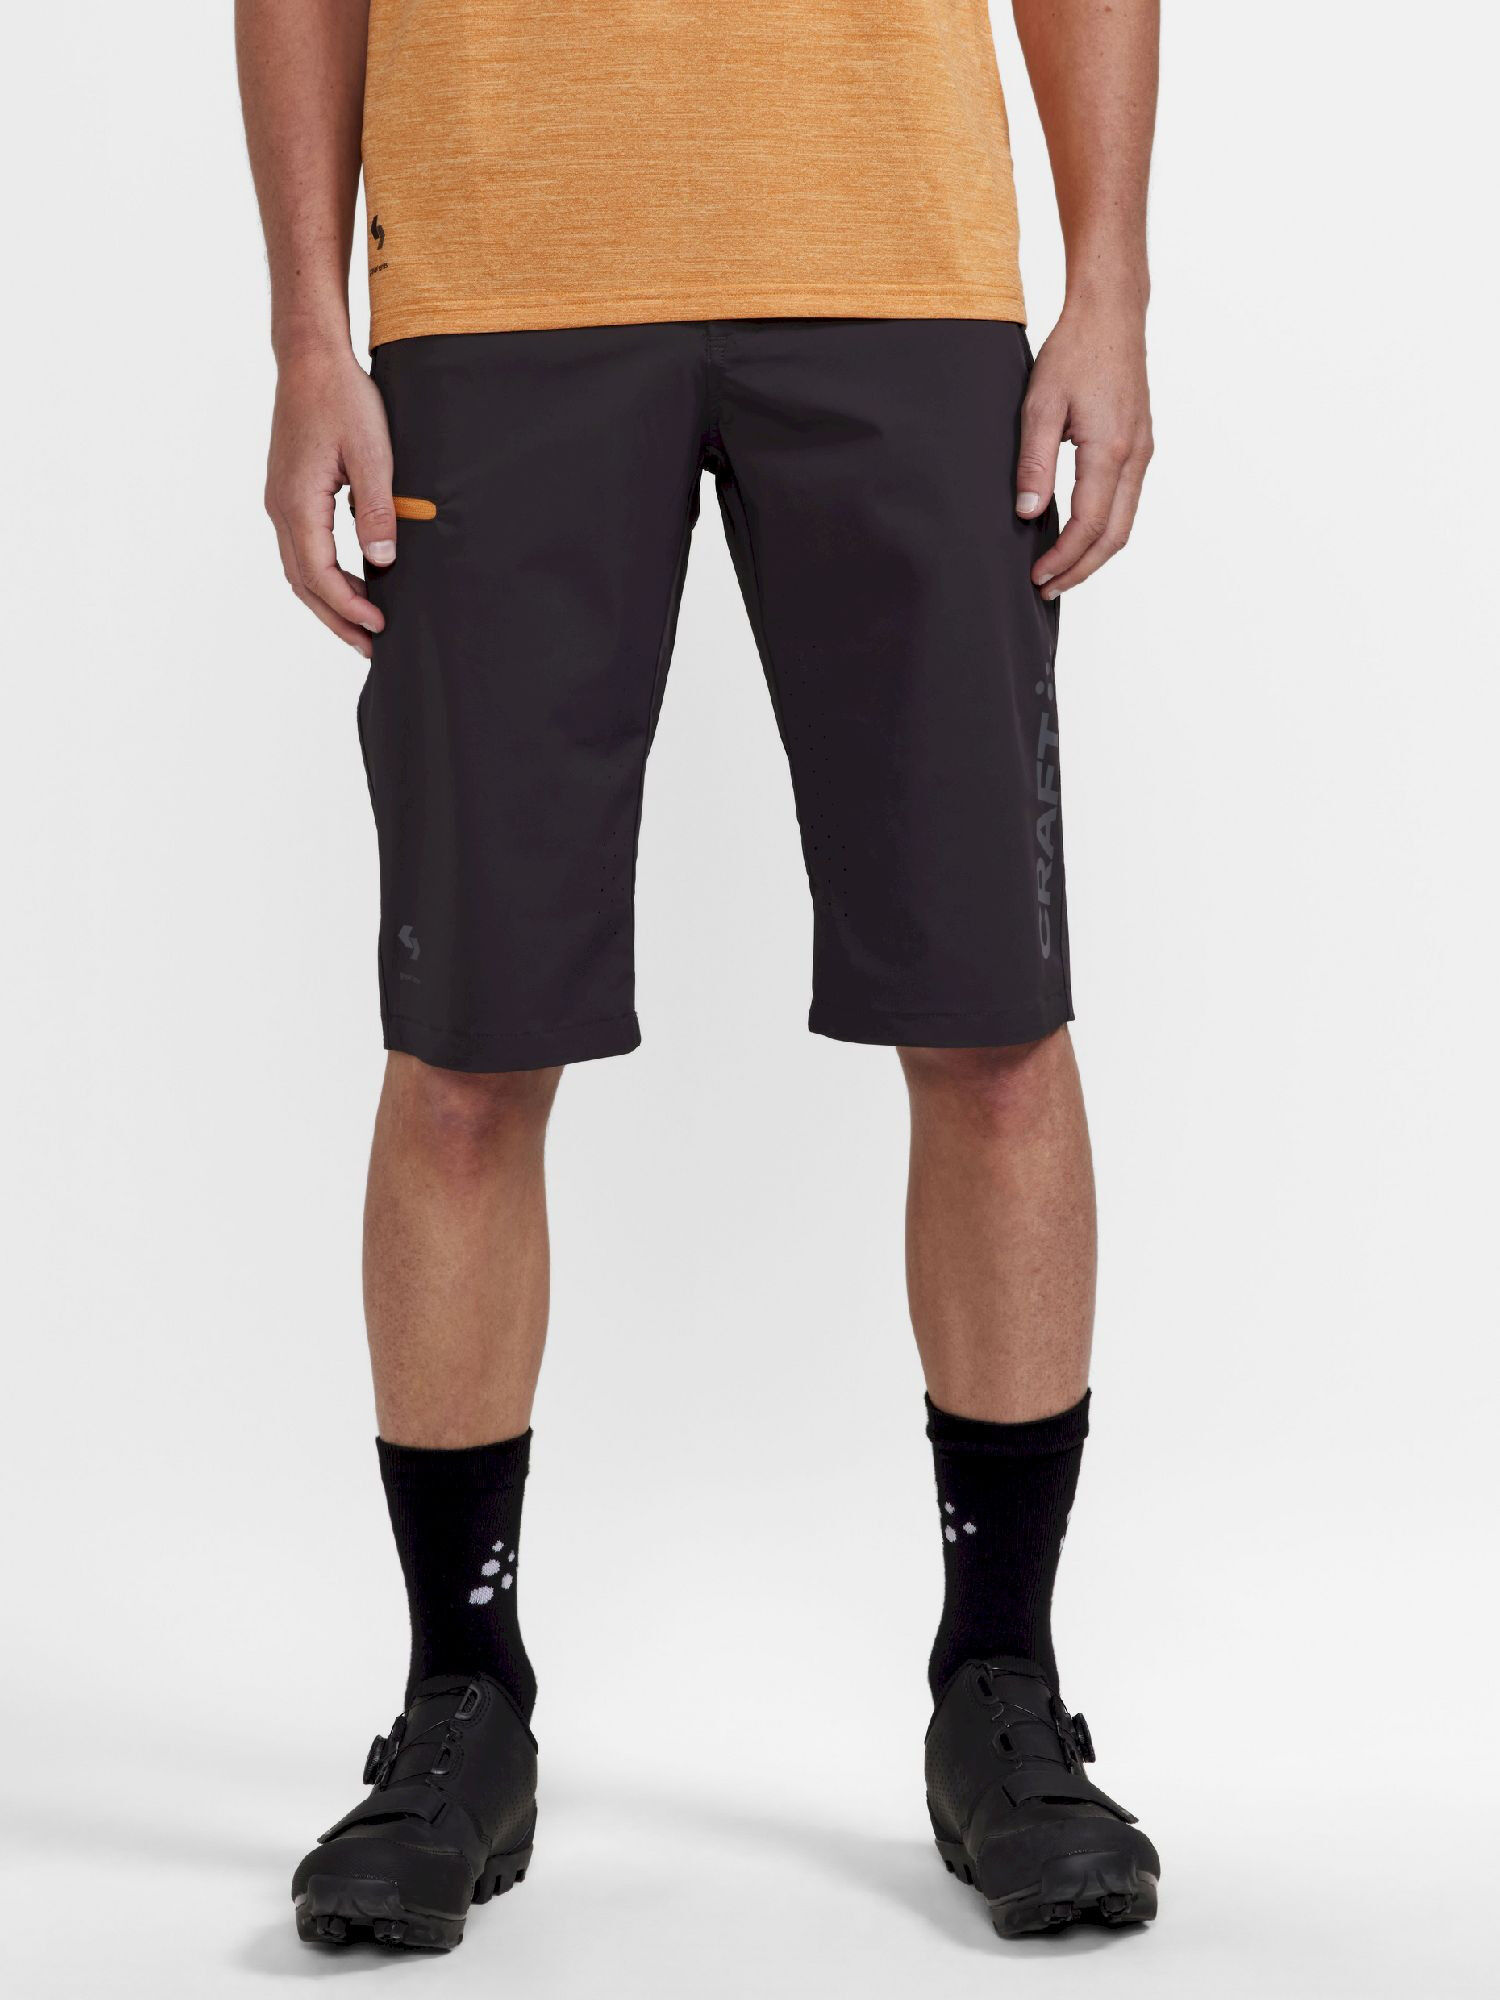 Craft Pro Gravel Shorts - Pantalones cortos ciclismo - Hombre | Hardloop